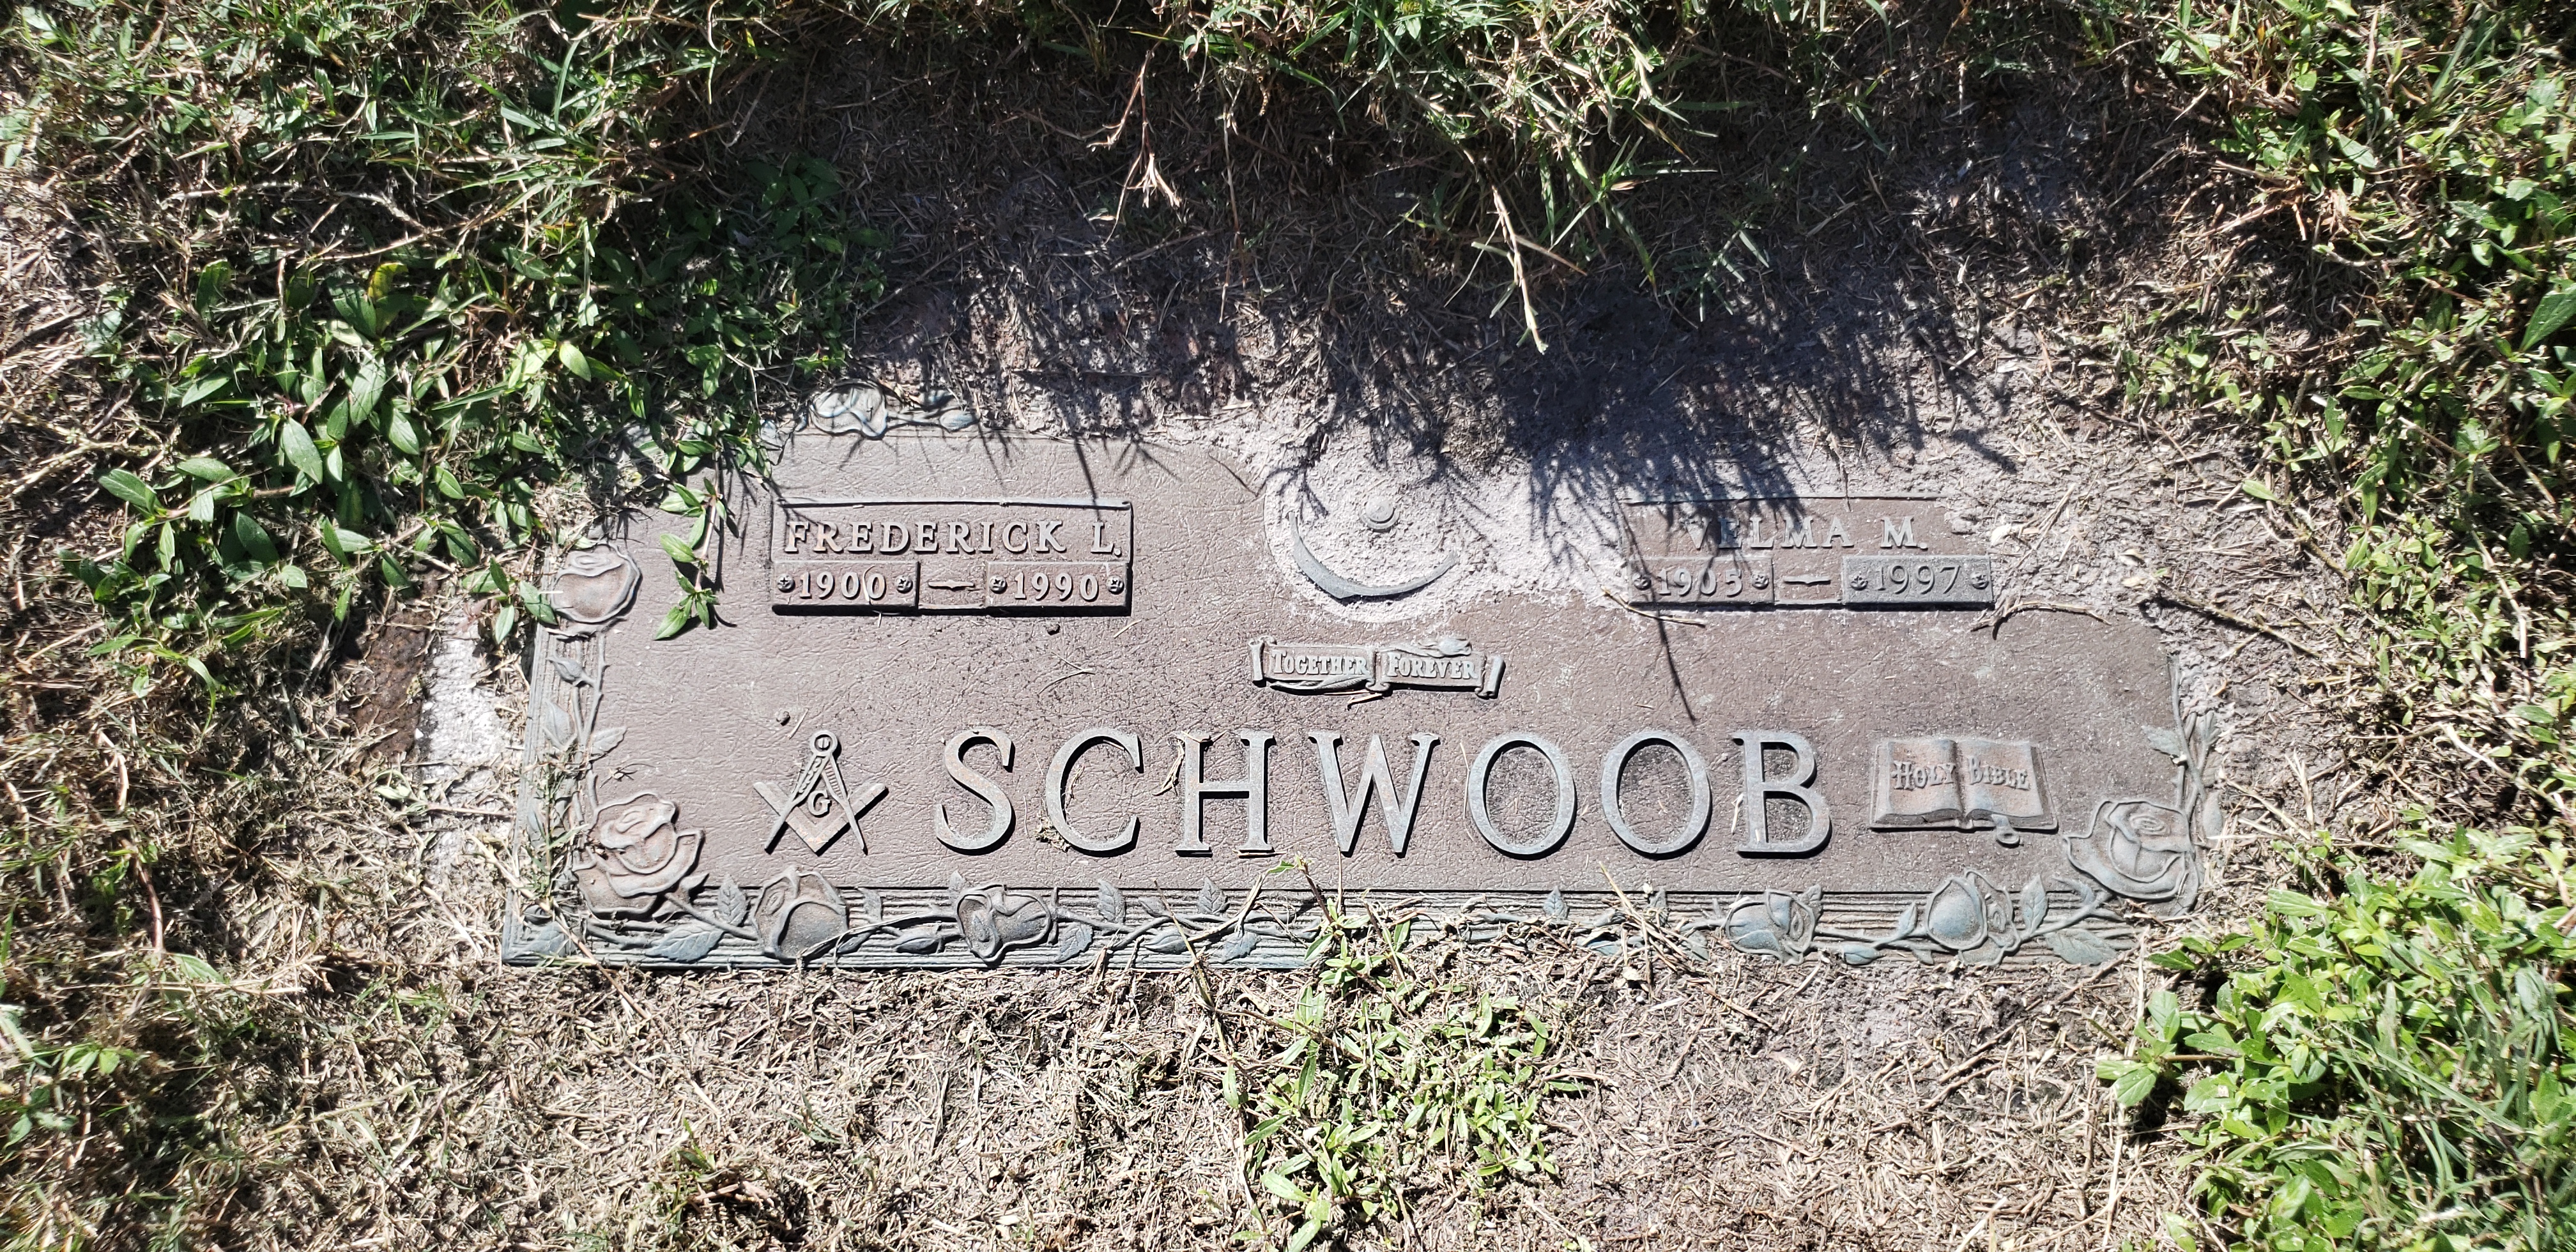 Frederick L Schwoob